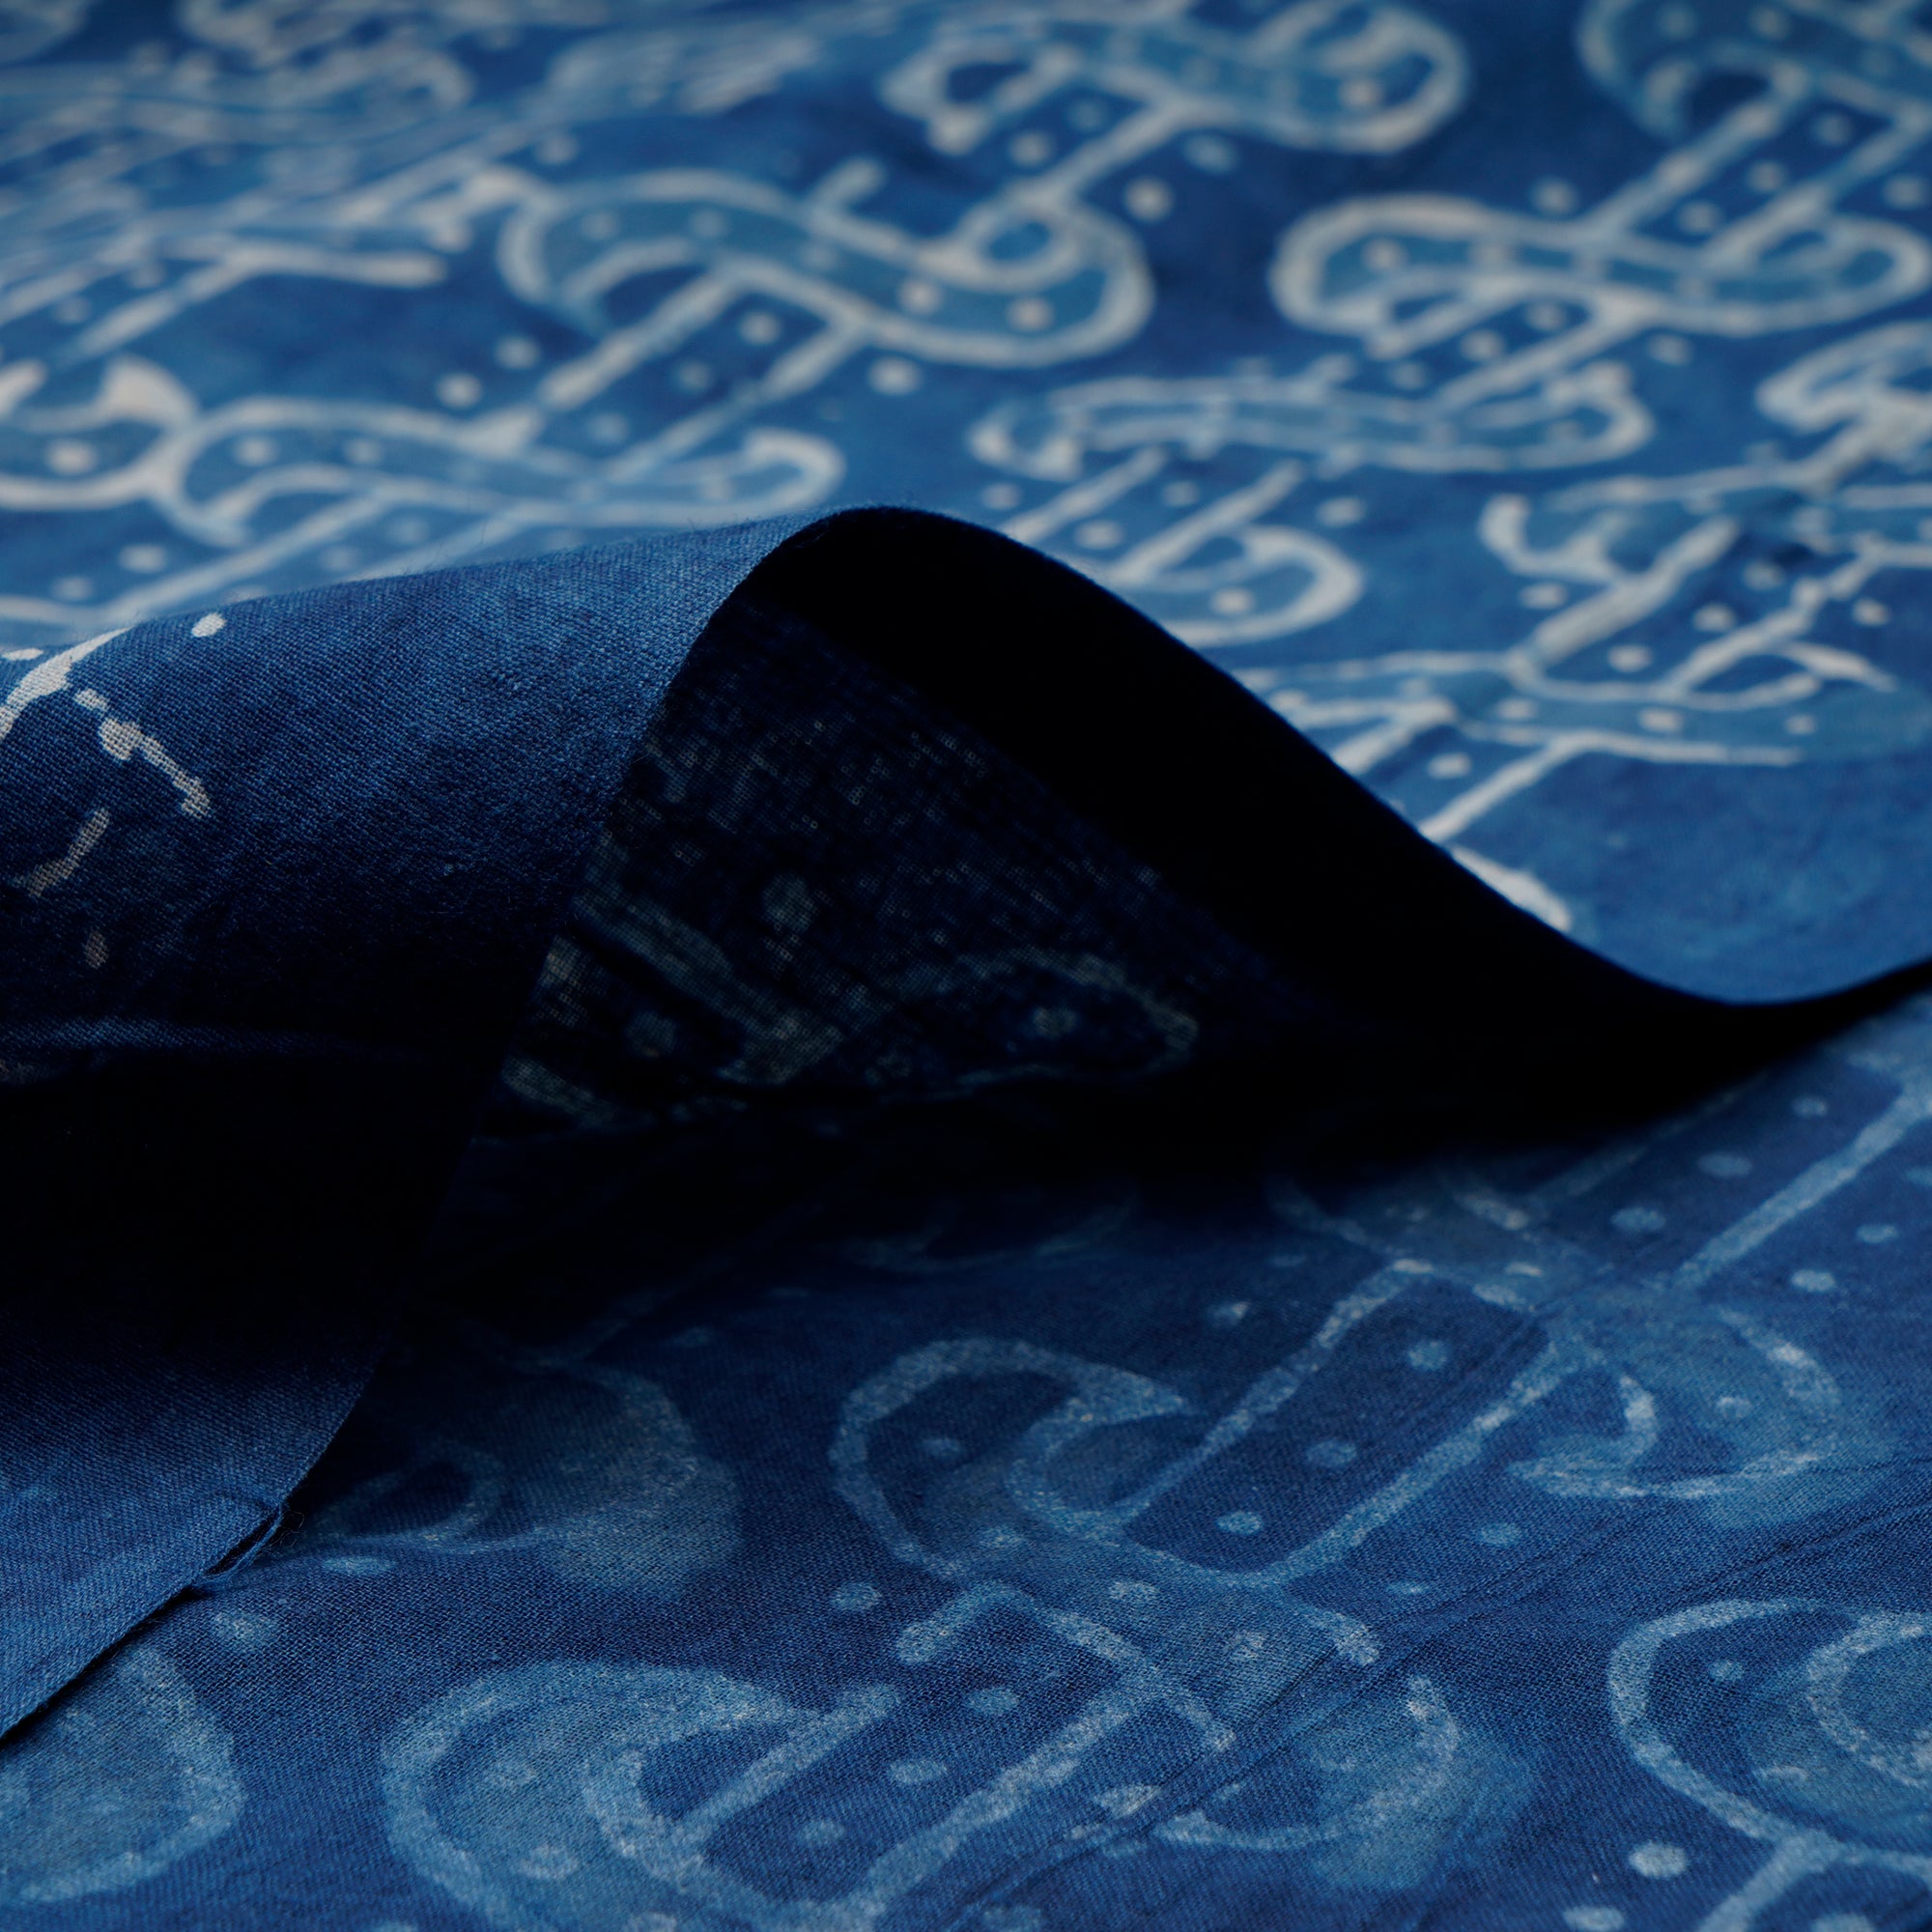 Blue Hand Block Bagru Natural Dye Indigo Printed Cotton Fabric